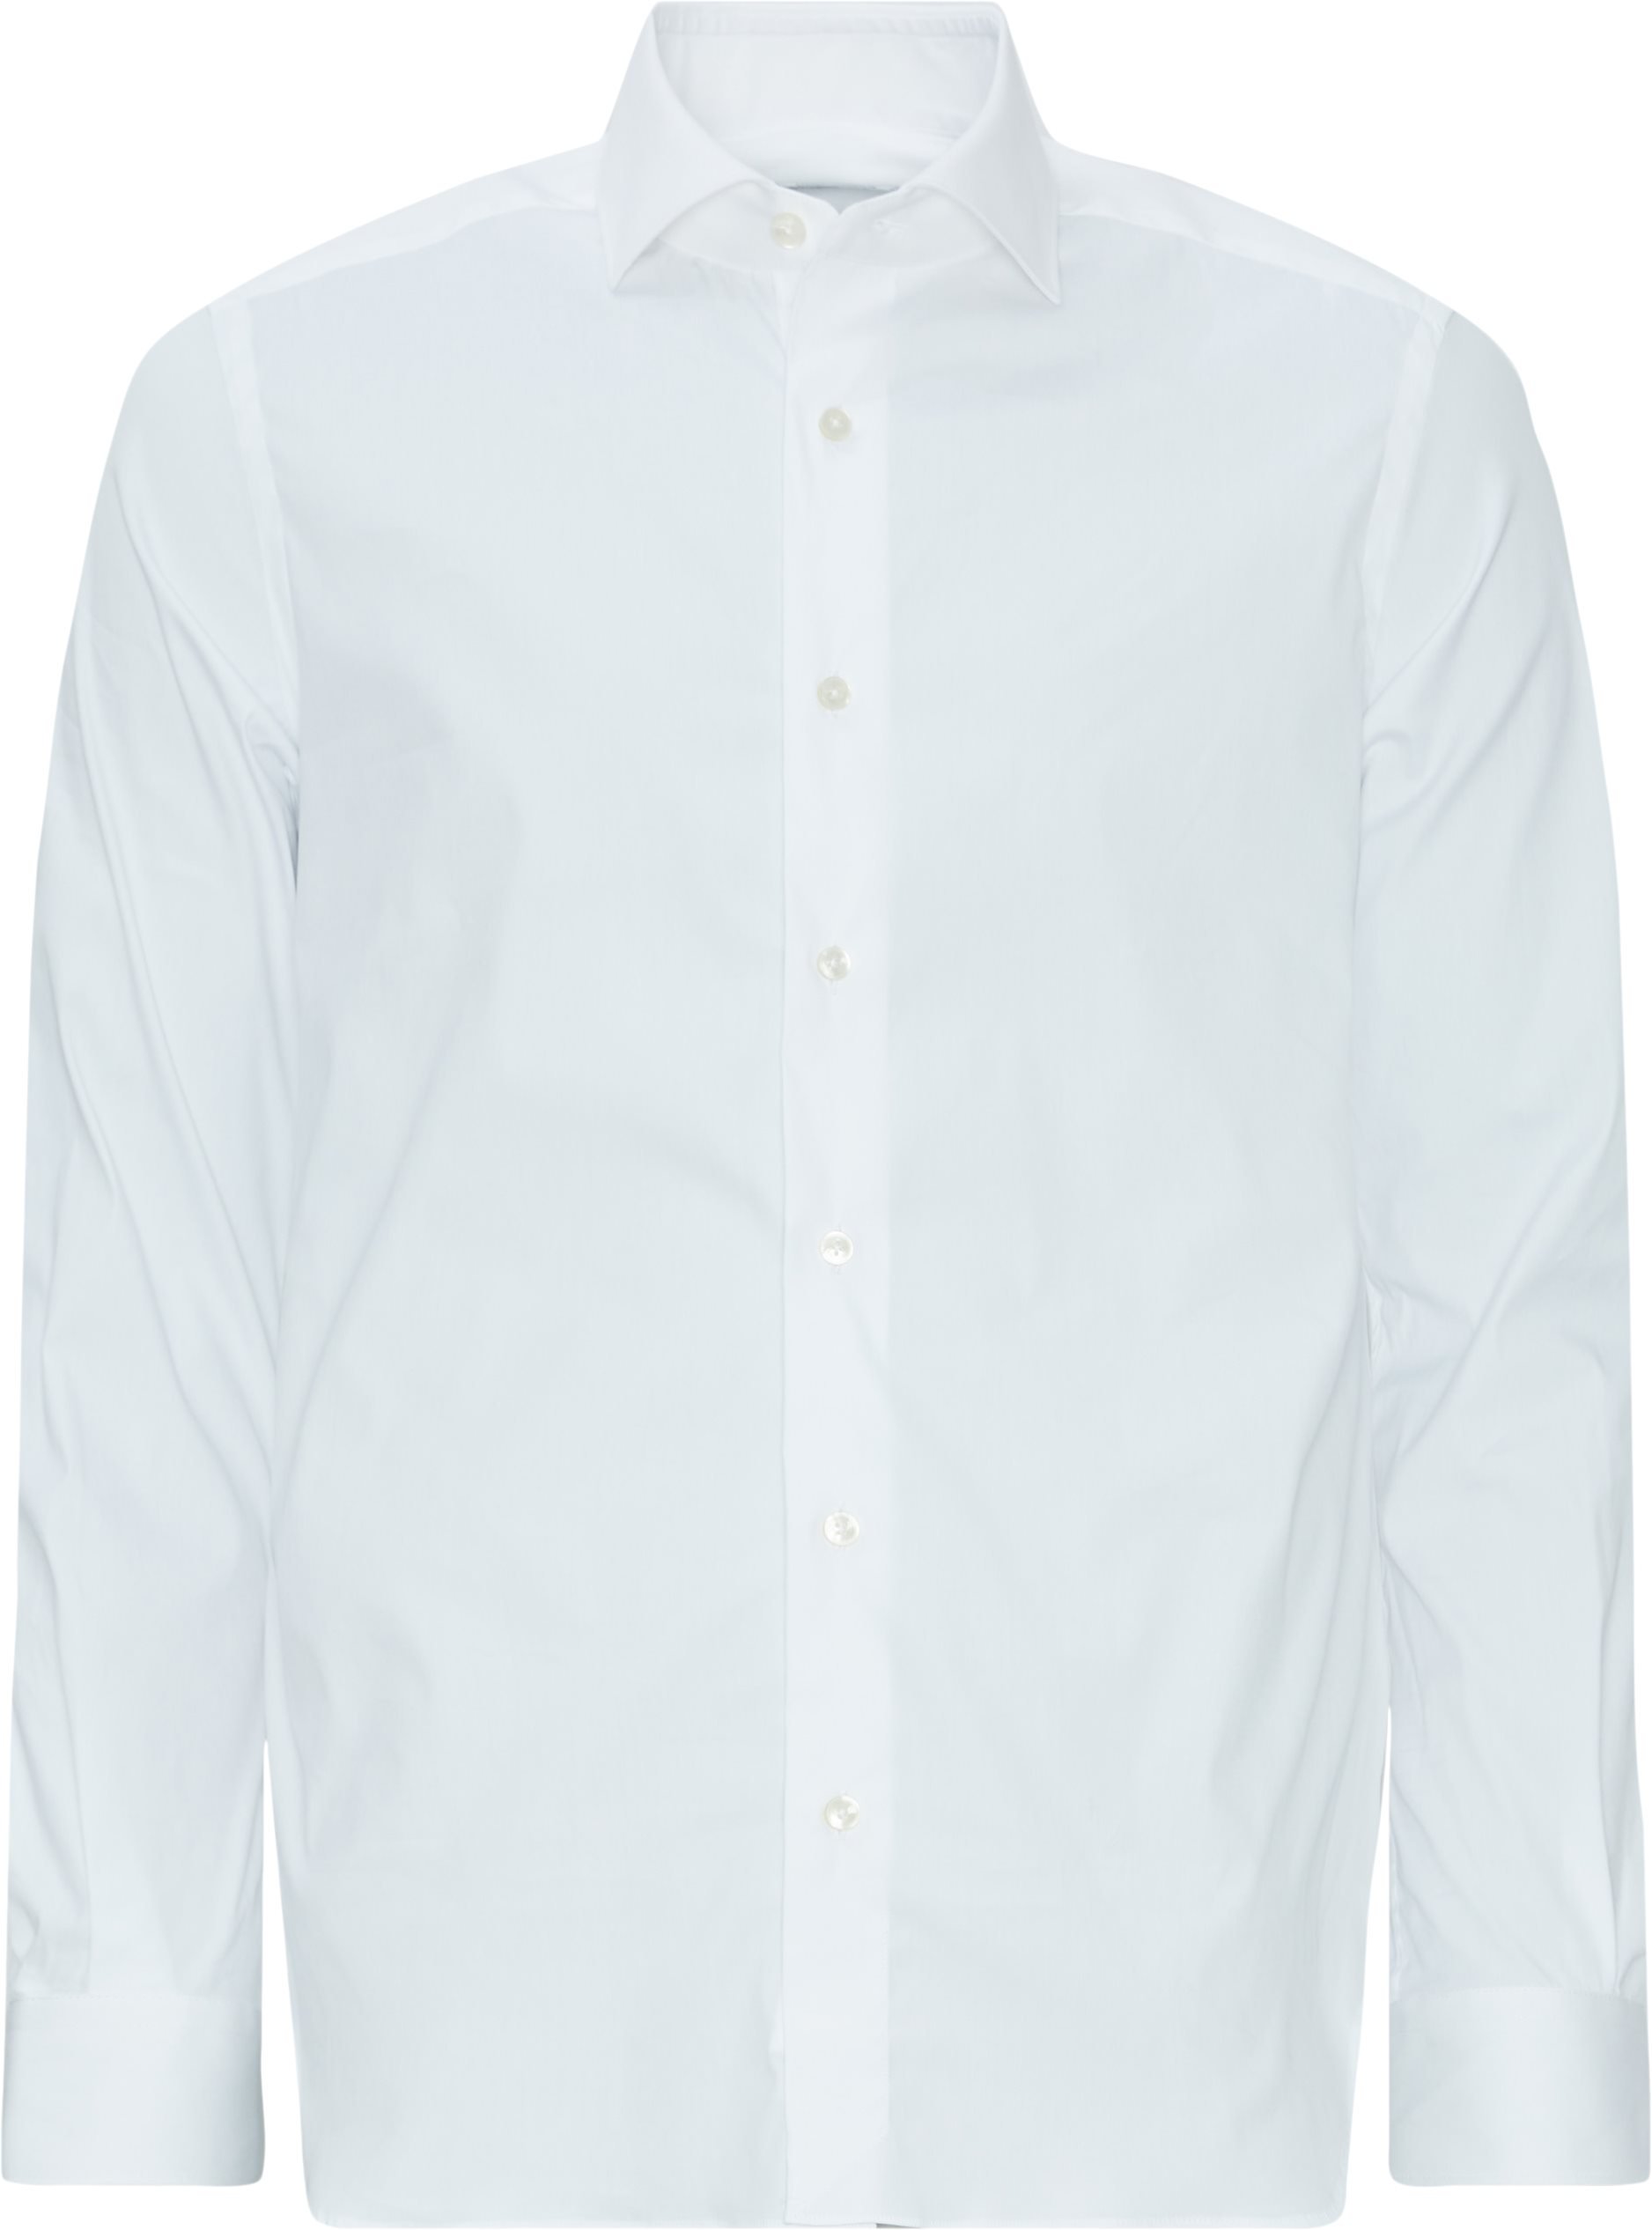 Xacus Shirts 16125 658 White